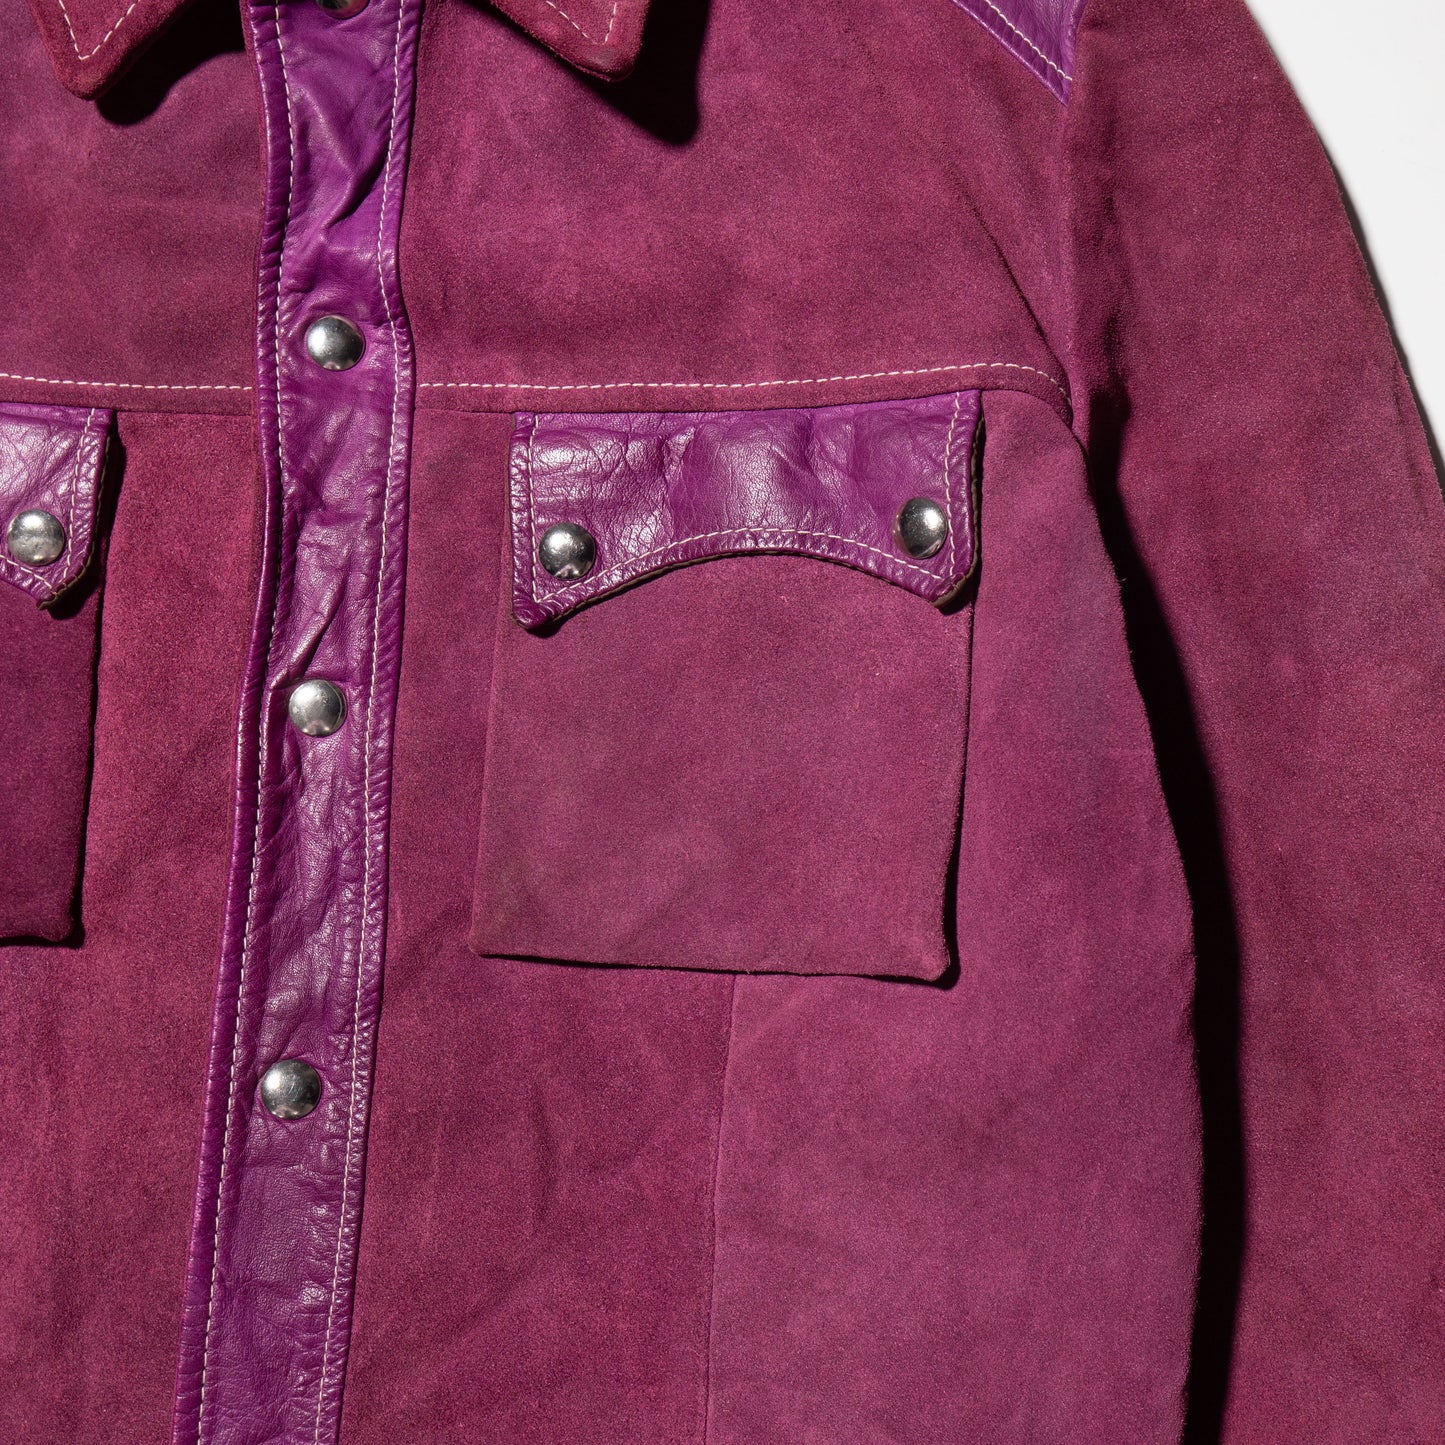 vintage 70's suede leather trucker jacket